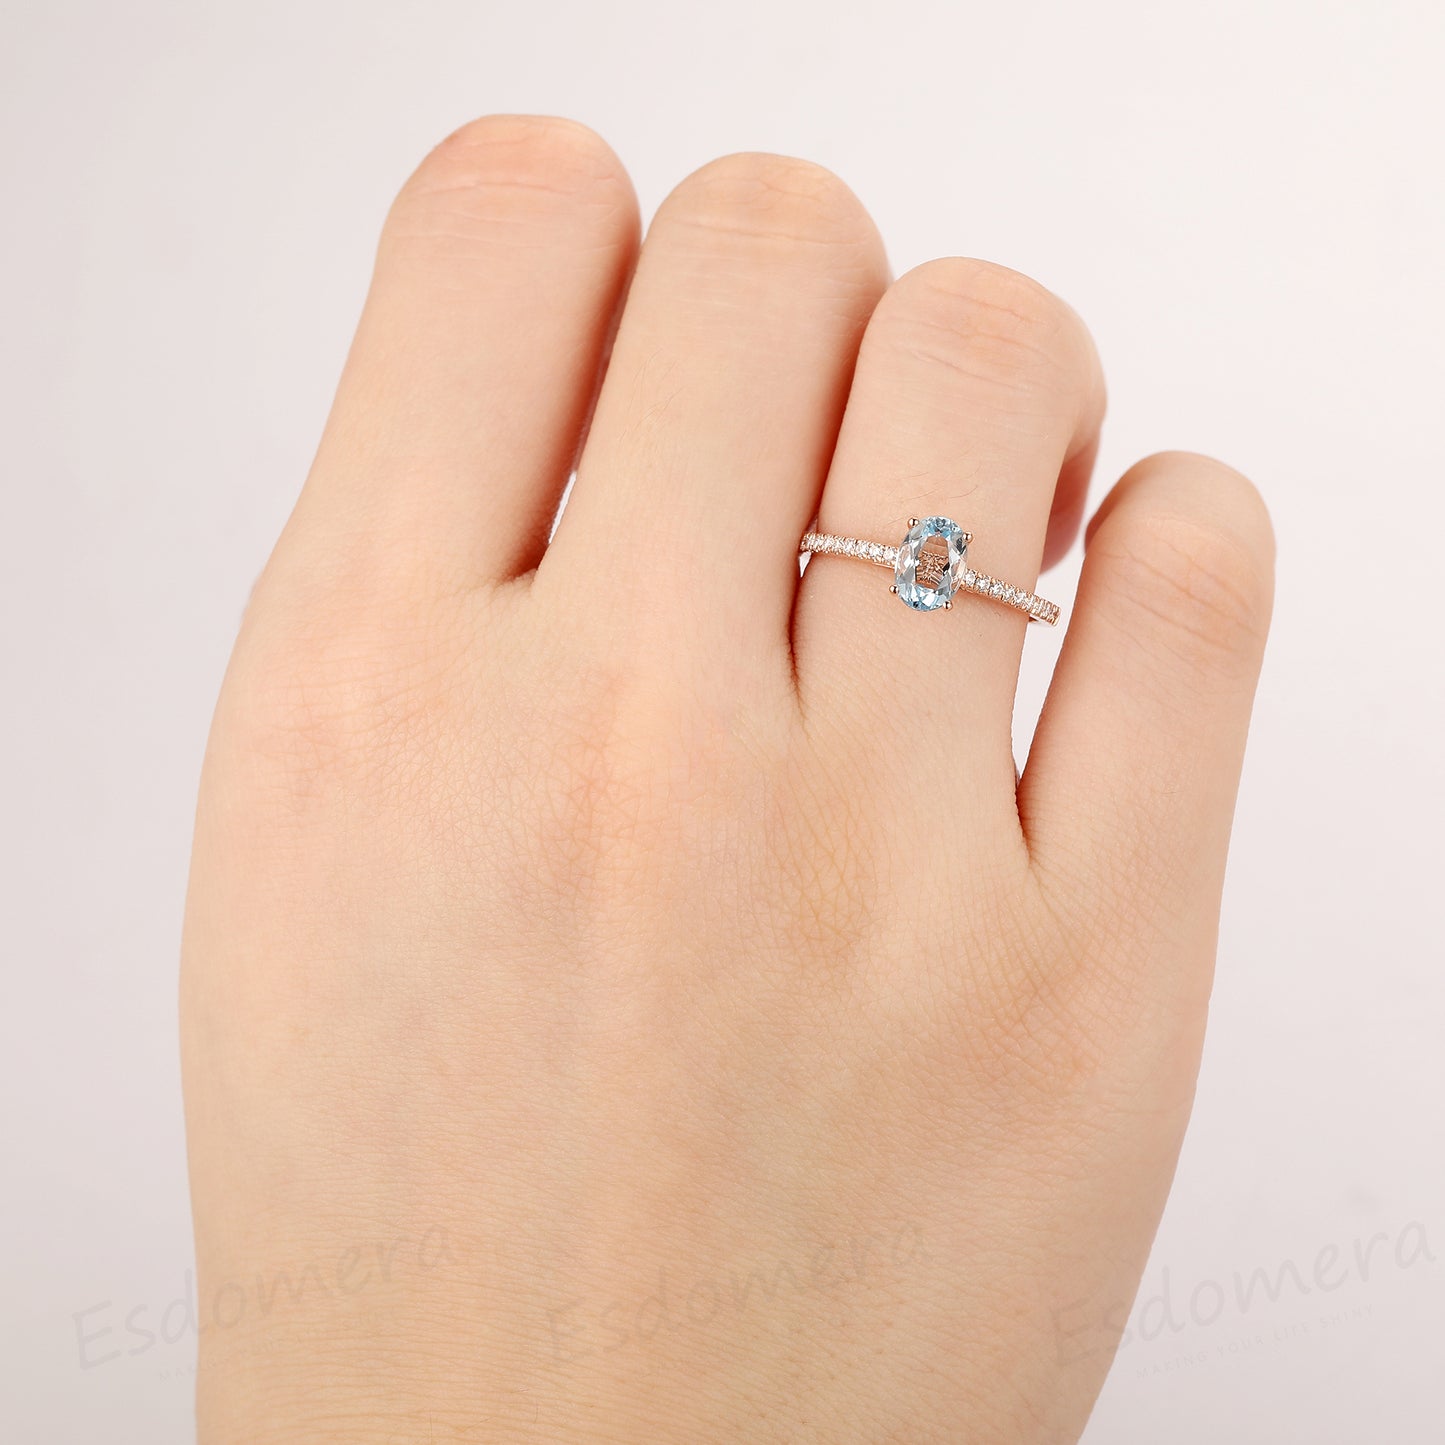 Oval Cut 1CT Natural Aquamarine Engagement Ring, 14K Rose Gold Wedding Ring